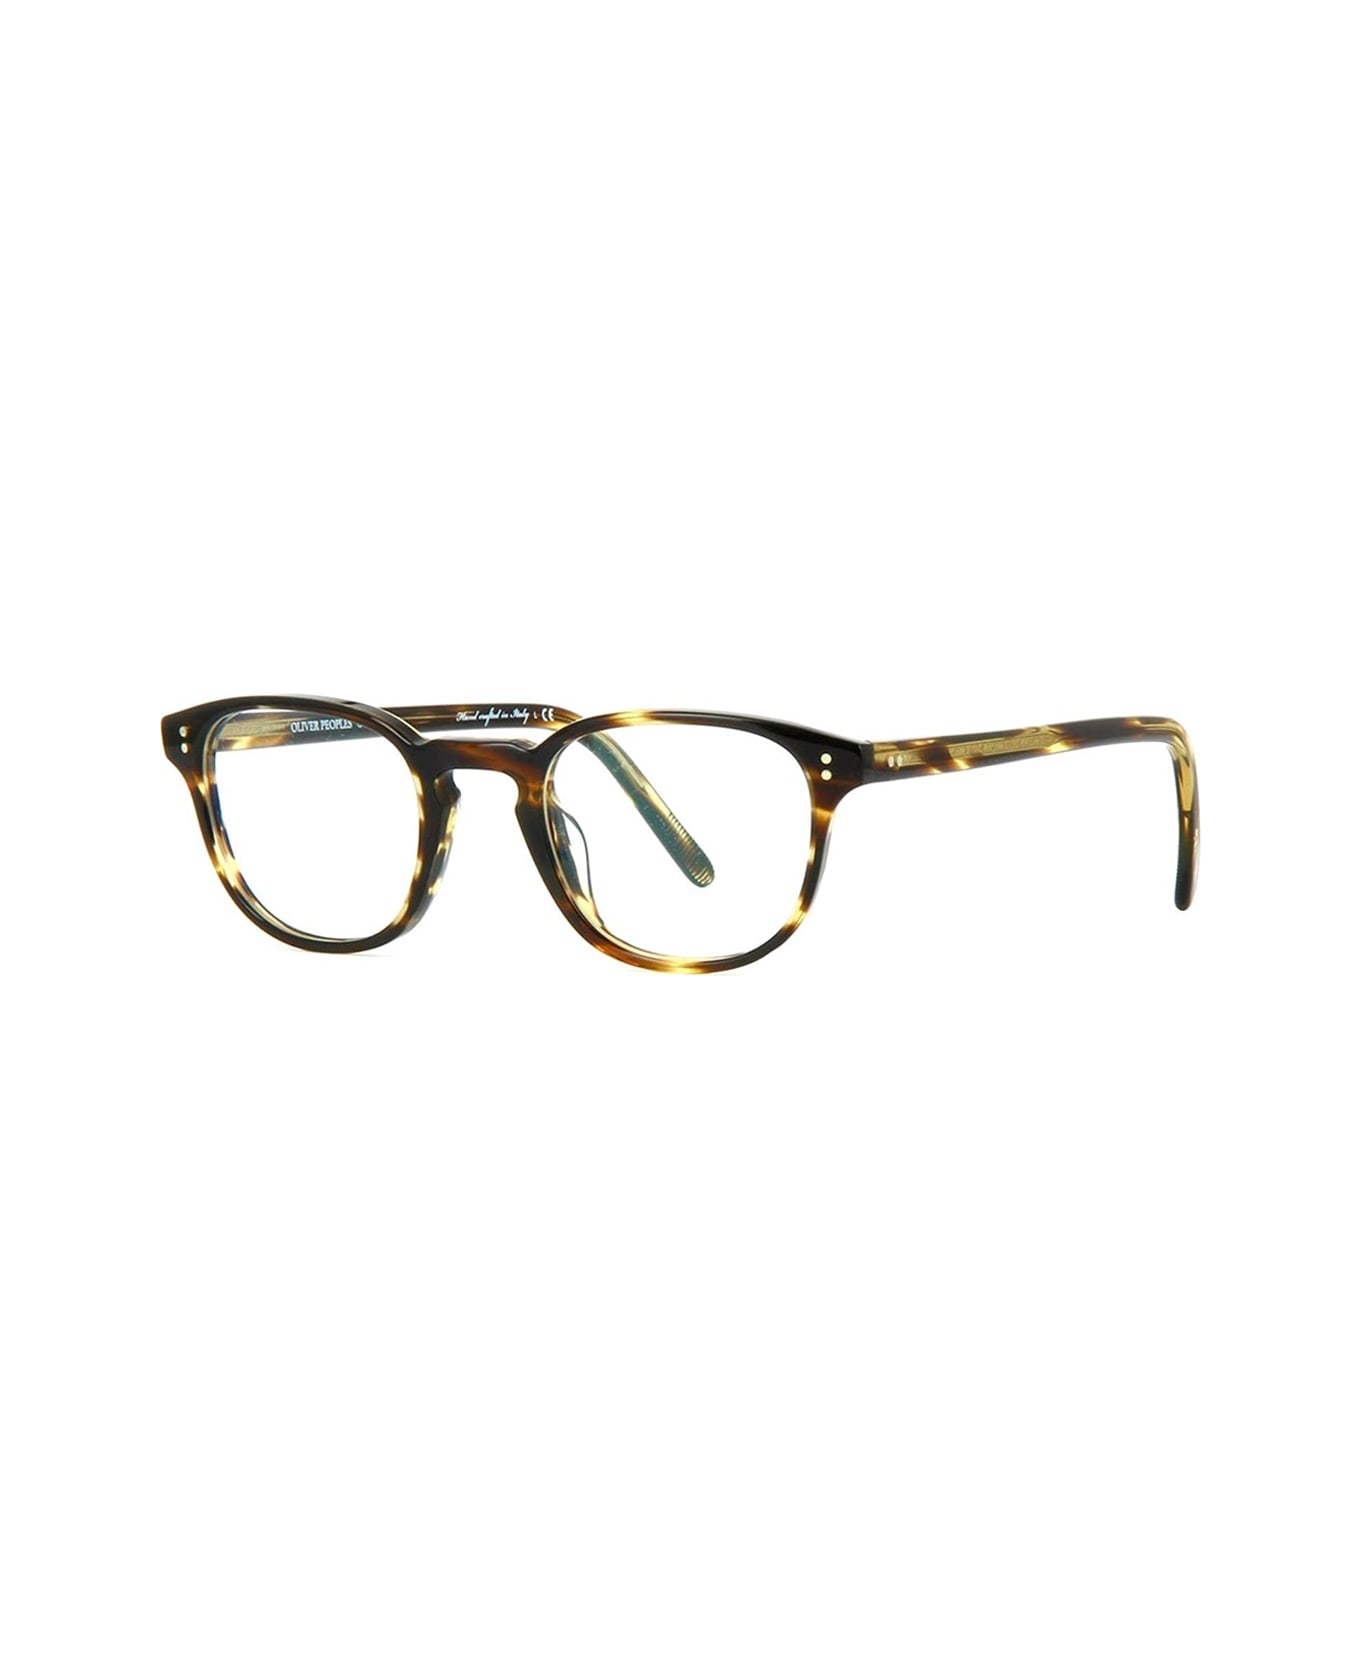 Oliver Peoples Ov5219 Glasses - Marrone